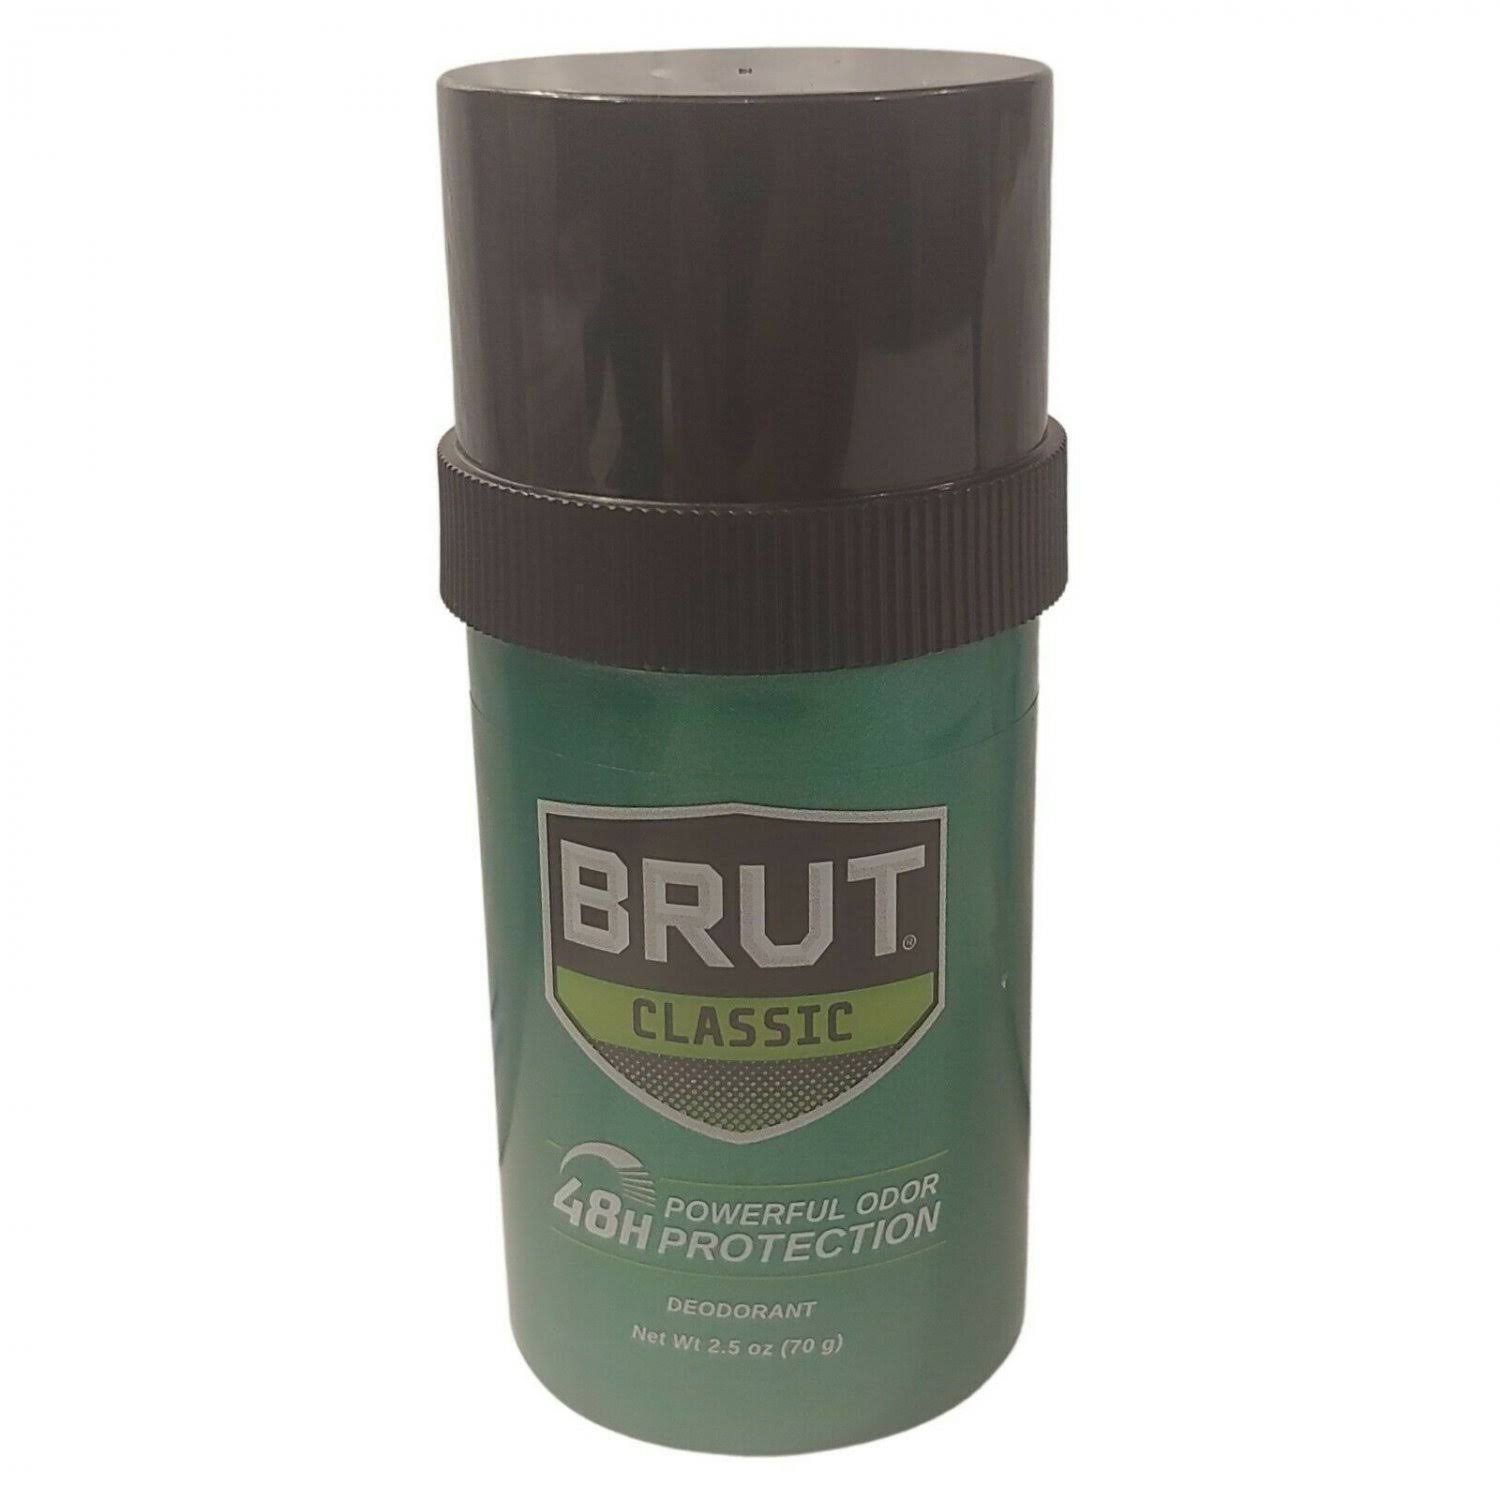 Brut 24 Hour Protection Deodorant - Classic Scent, 2.5oz